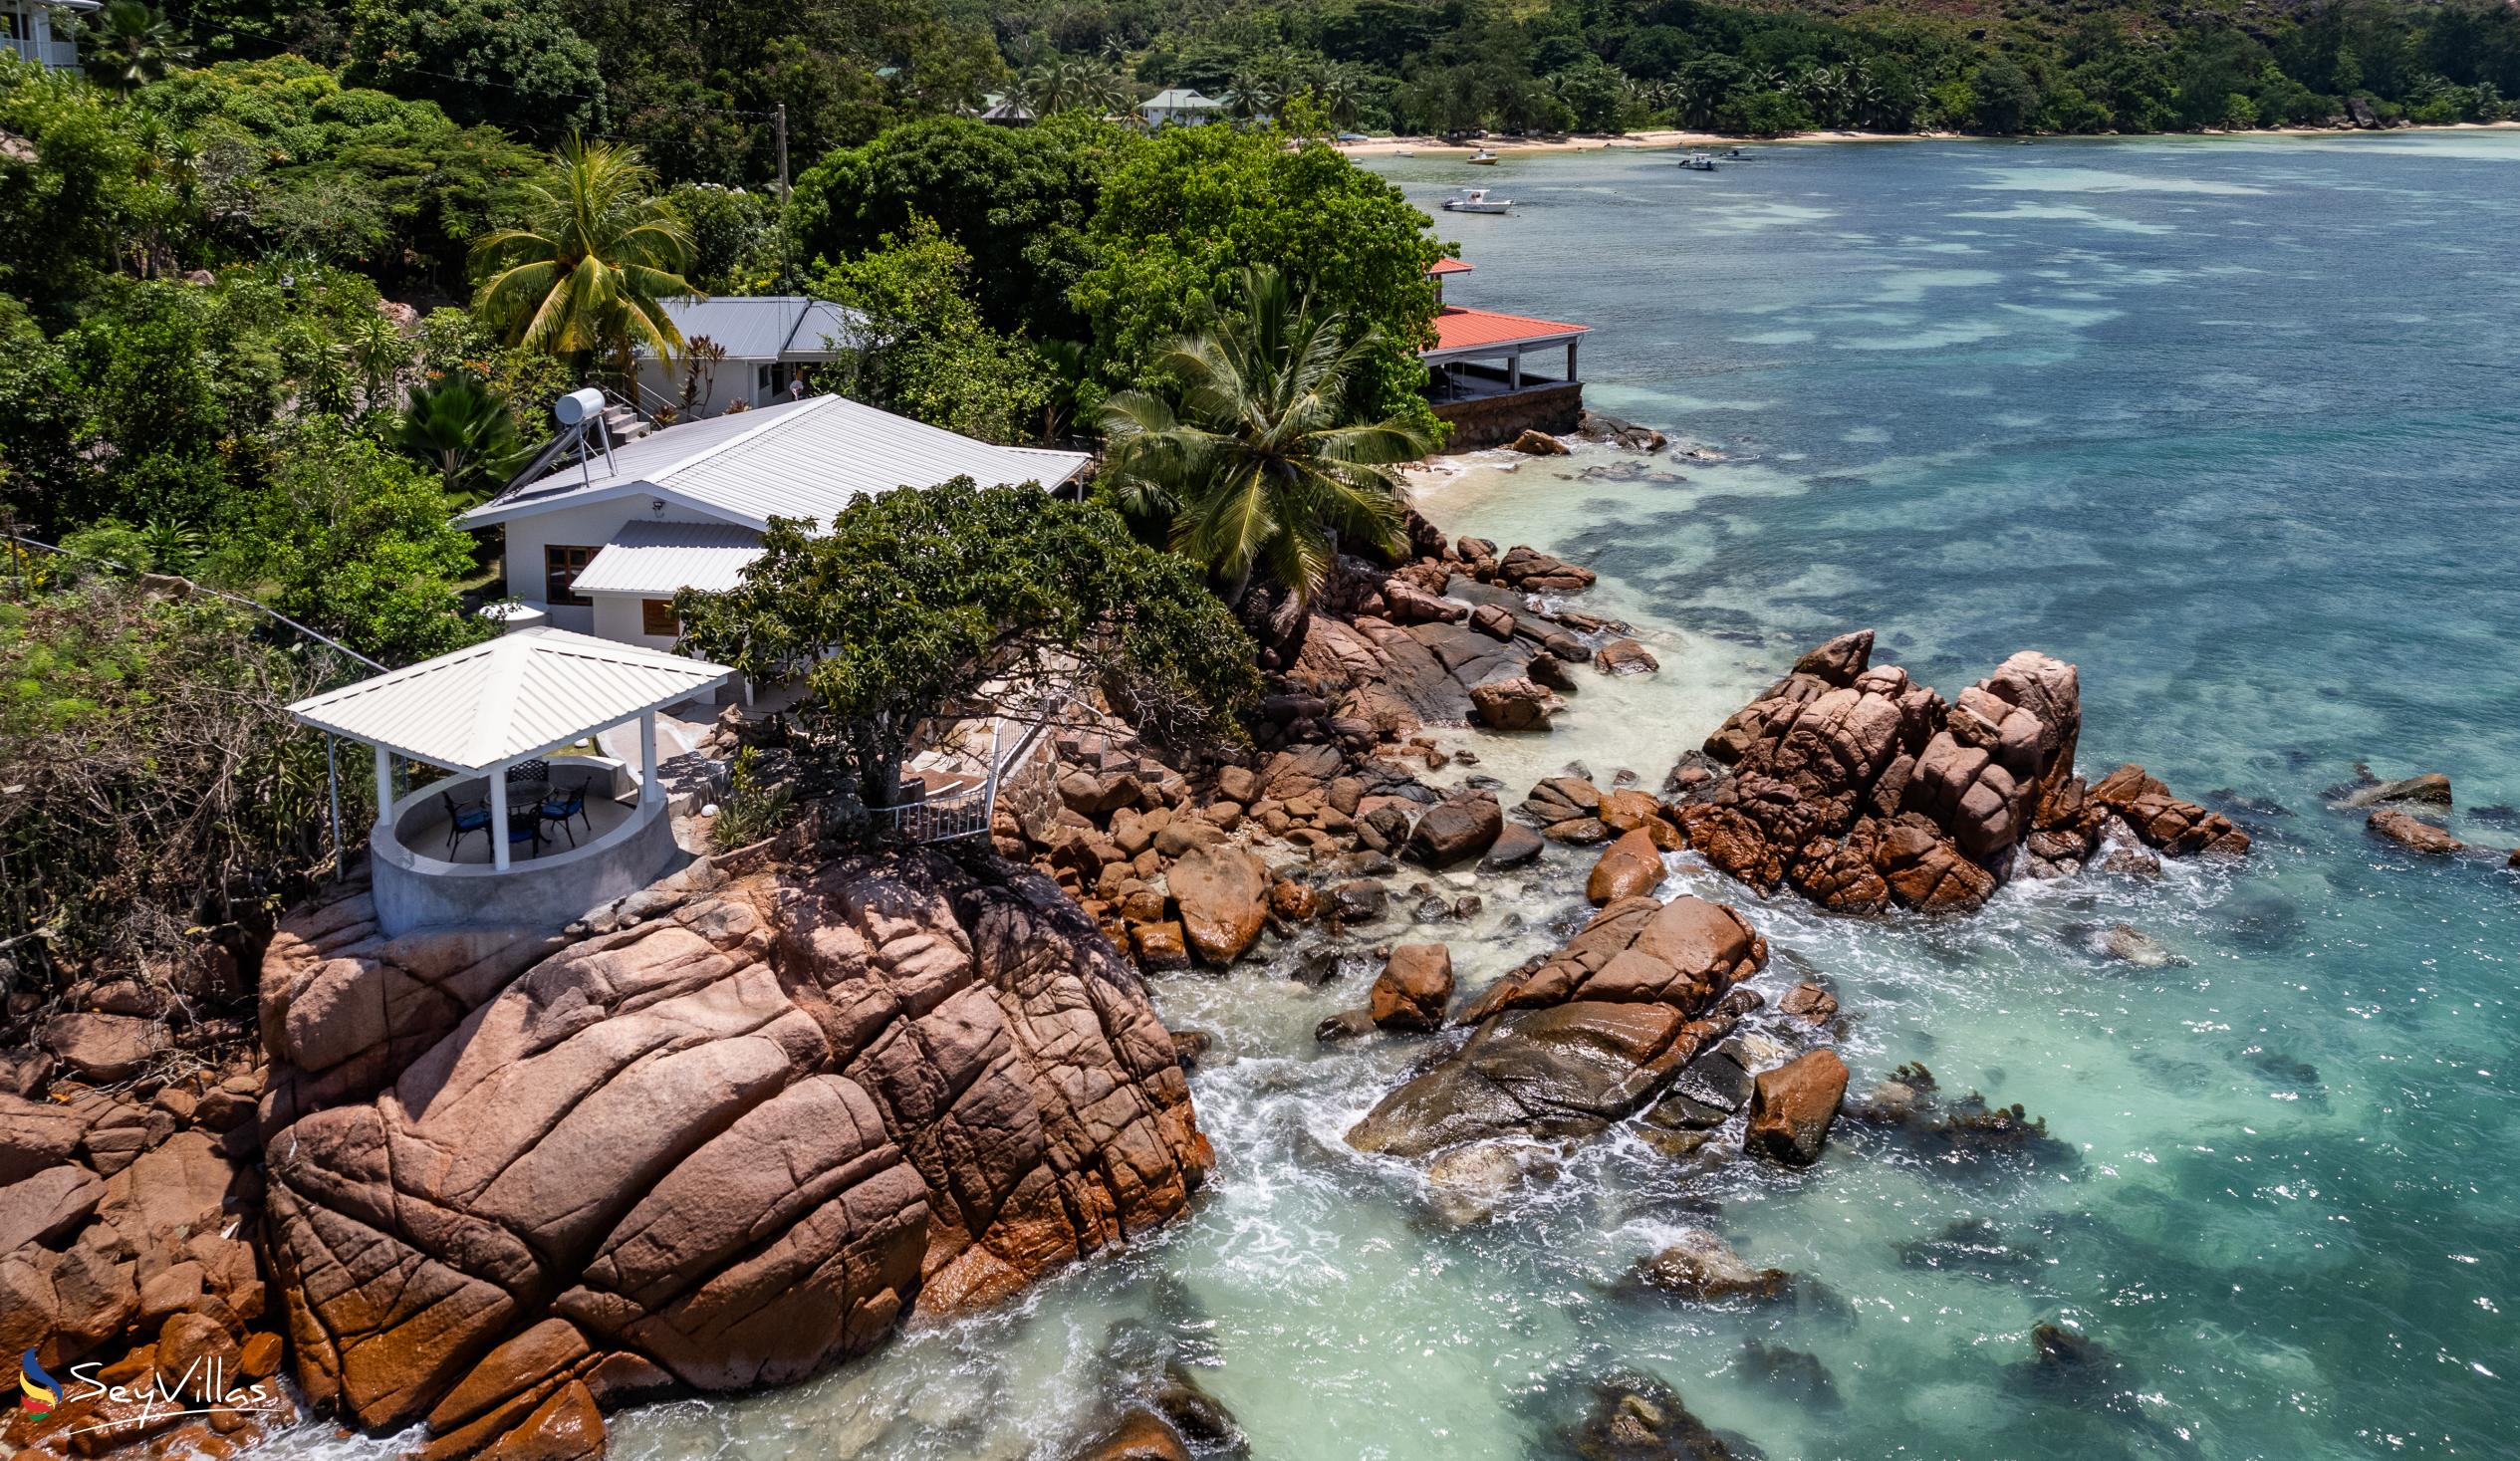 Photo 6: Coin D'Or - Outdoor area - Praslin (Seychelles)